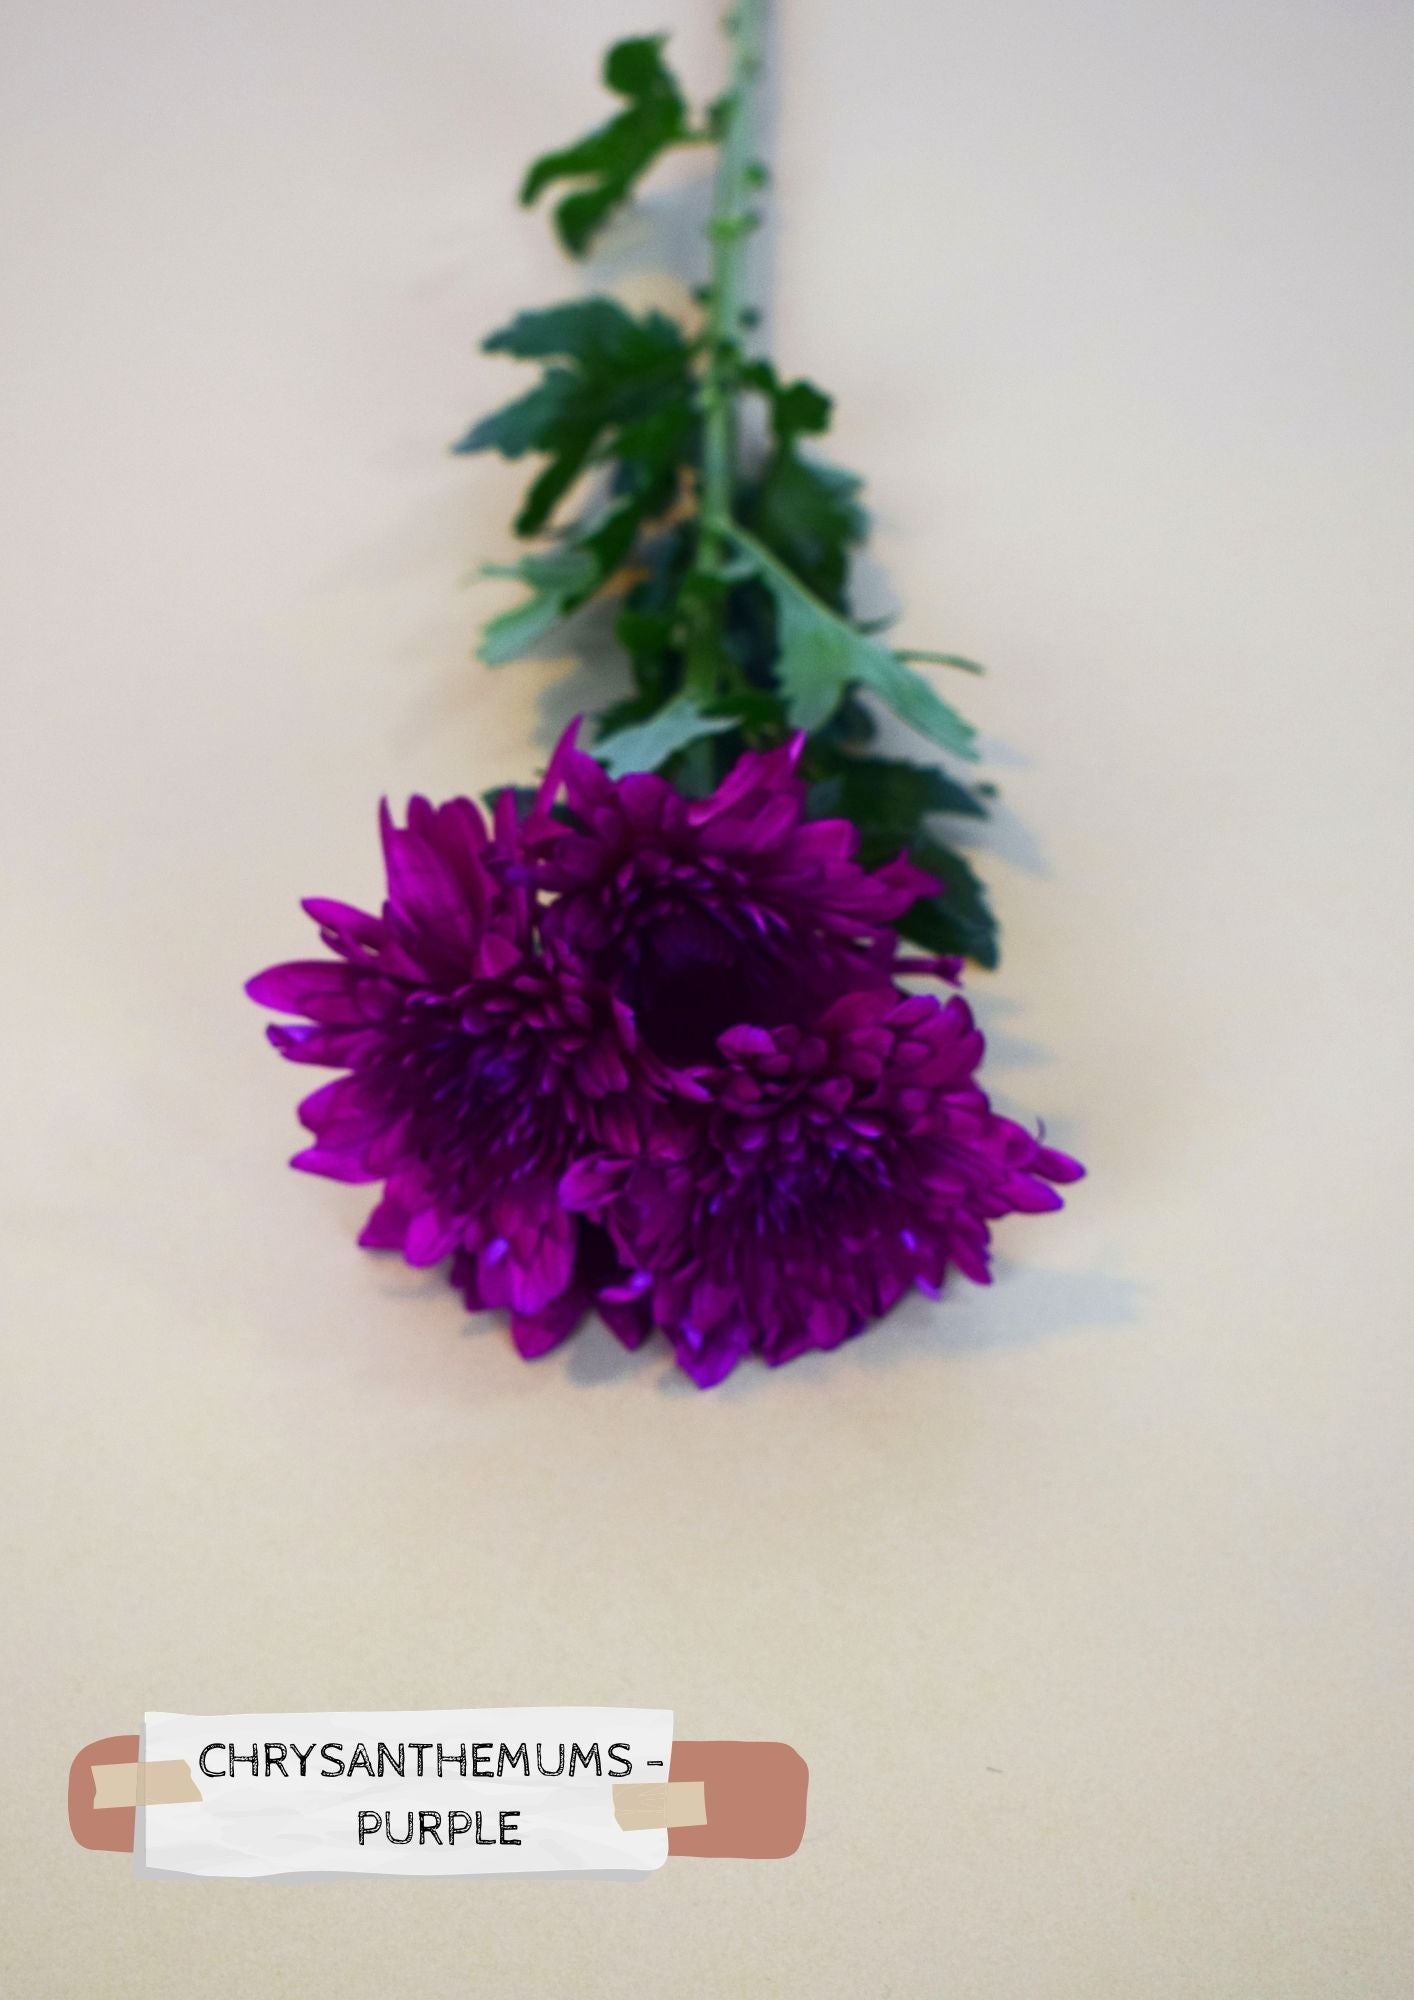 Chrysanthemum - Purple